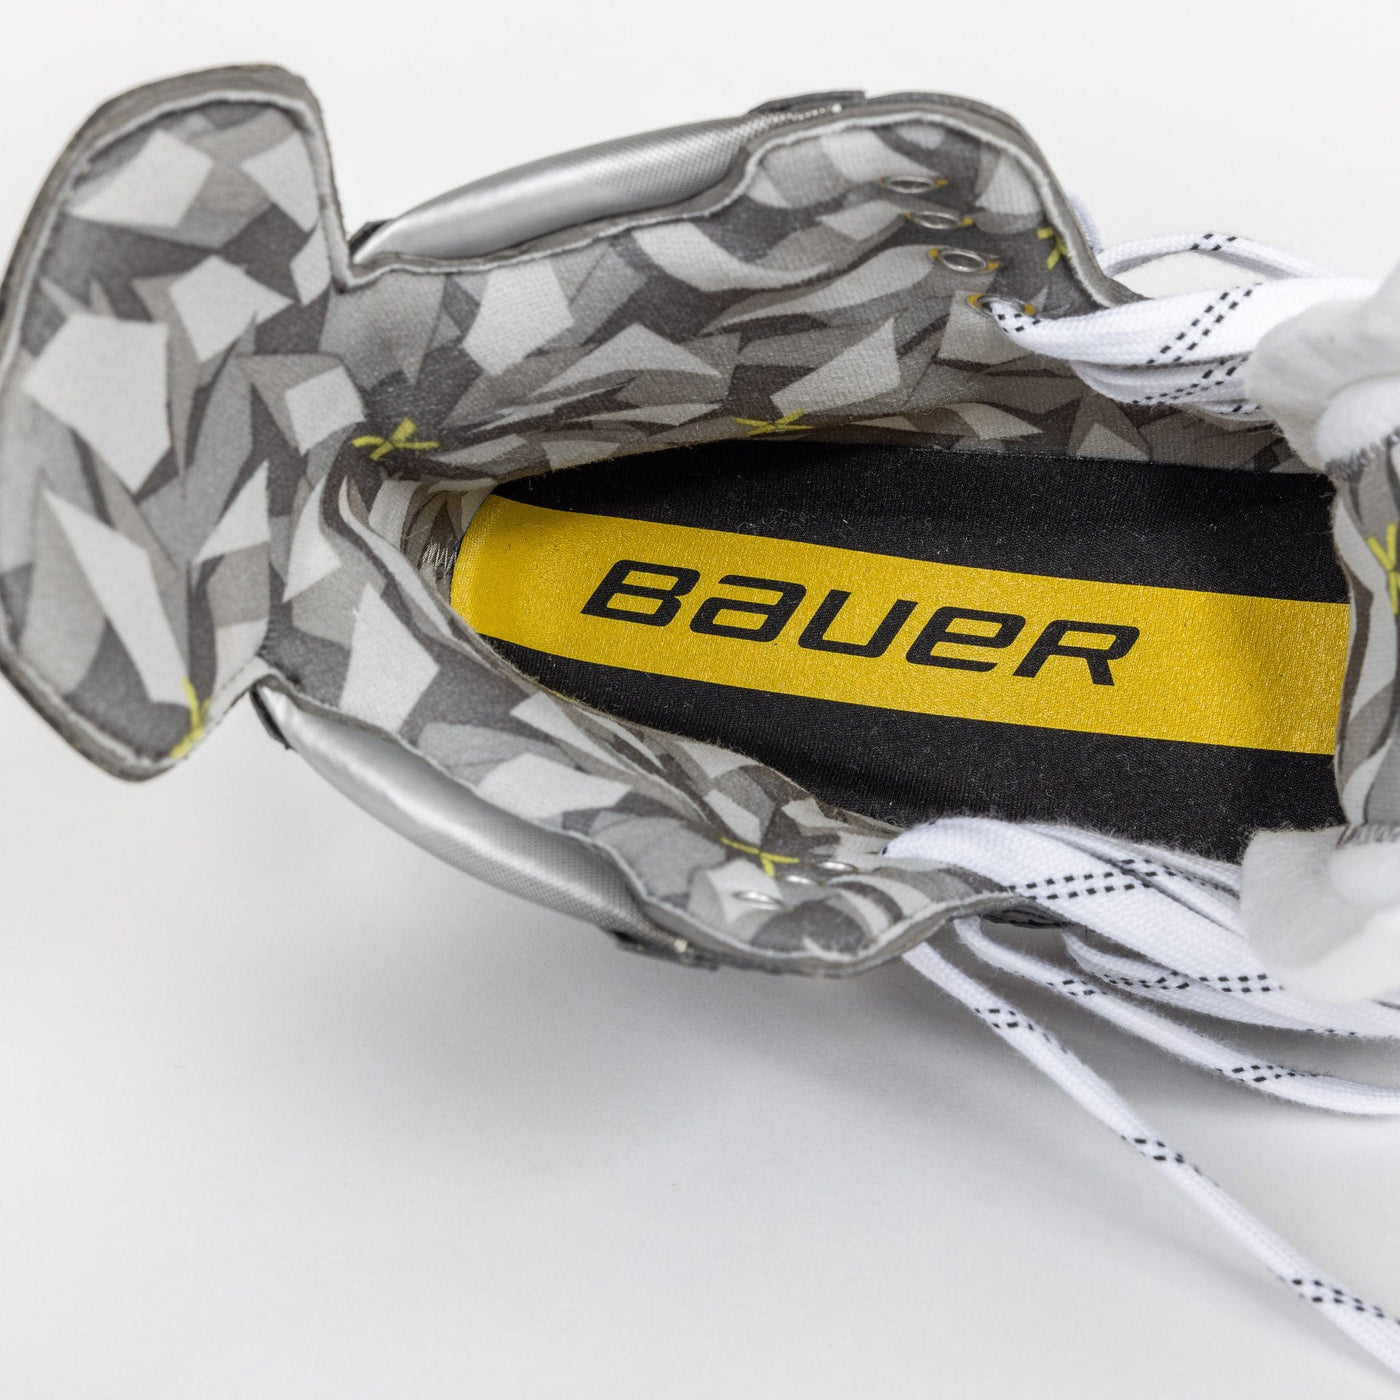 Bauer Vapor X3 Senior Hockey Skates - The Hockey Shop Source For Sports